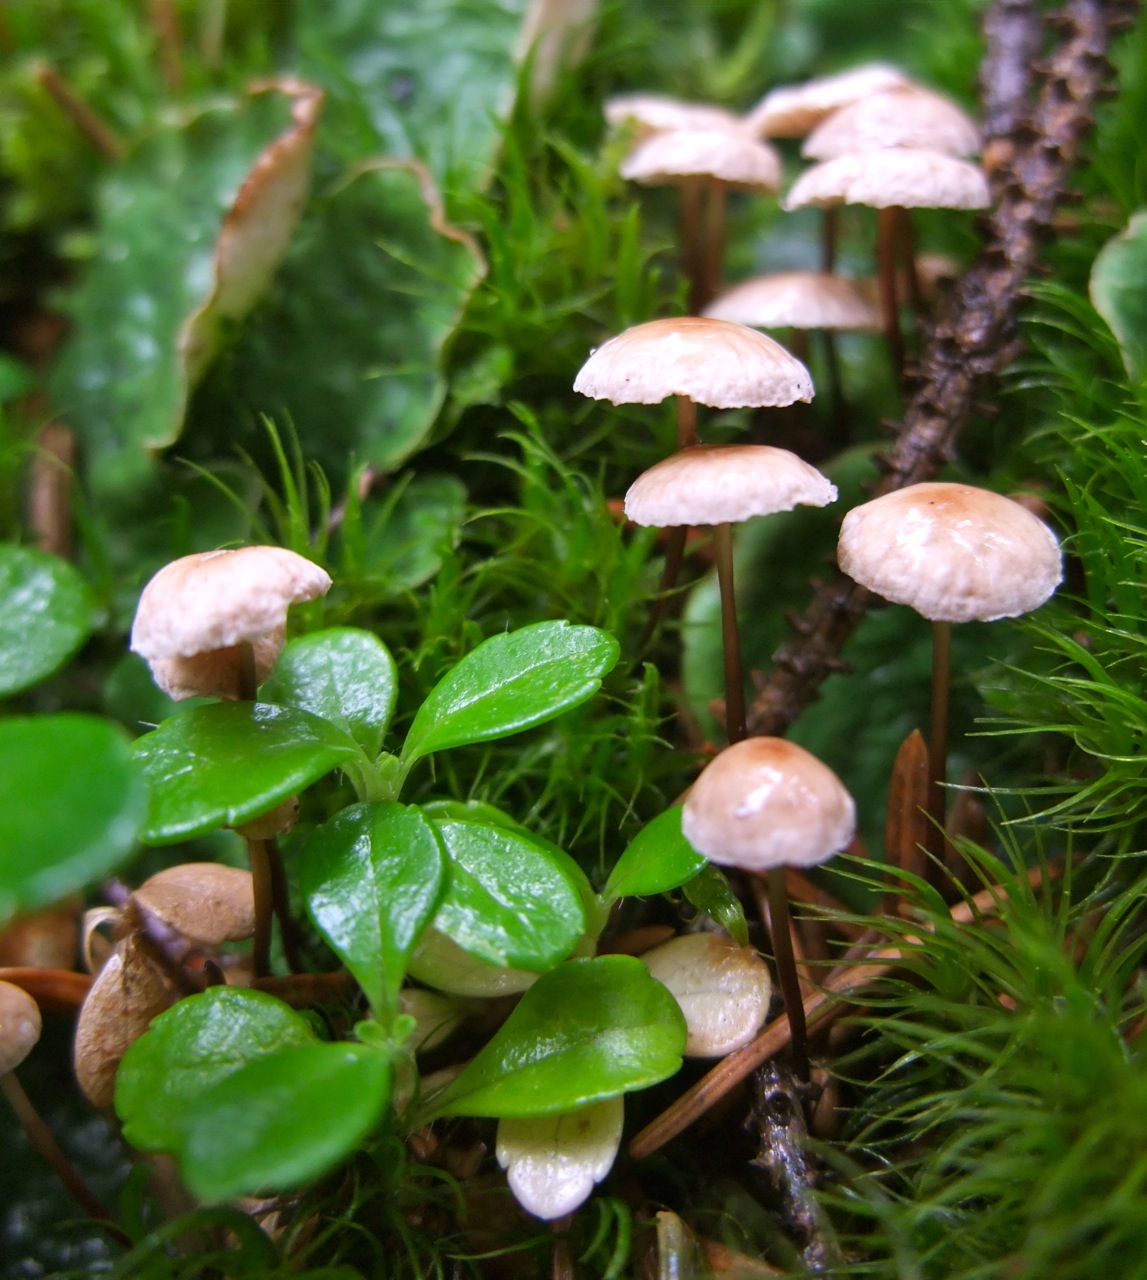  ... river basin near keystone colorado the caps of these mushrooms are